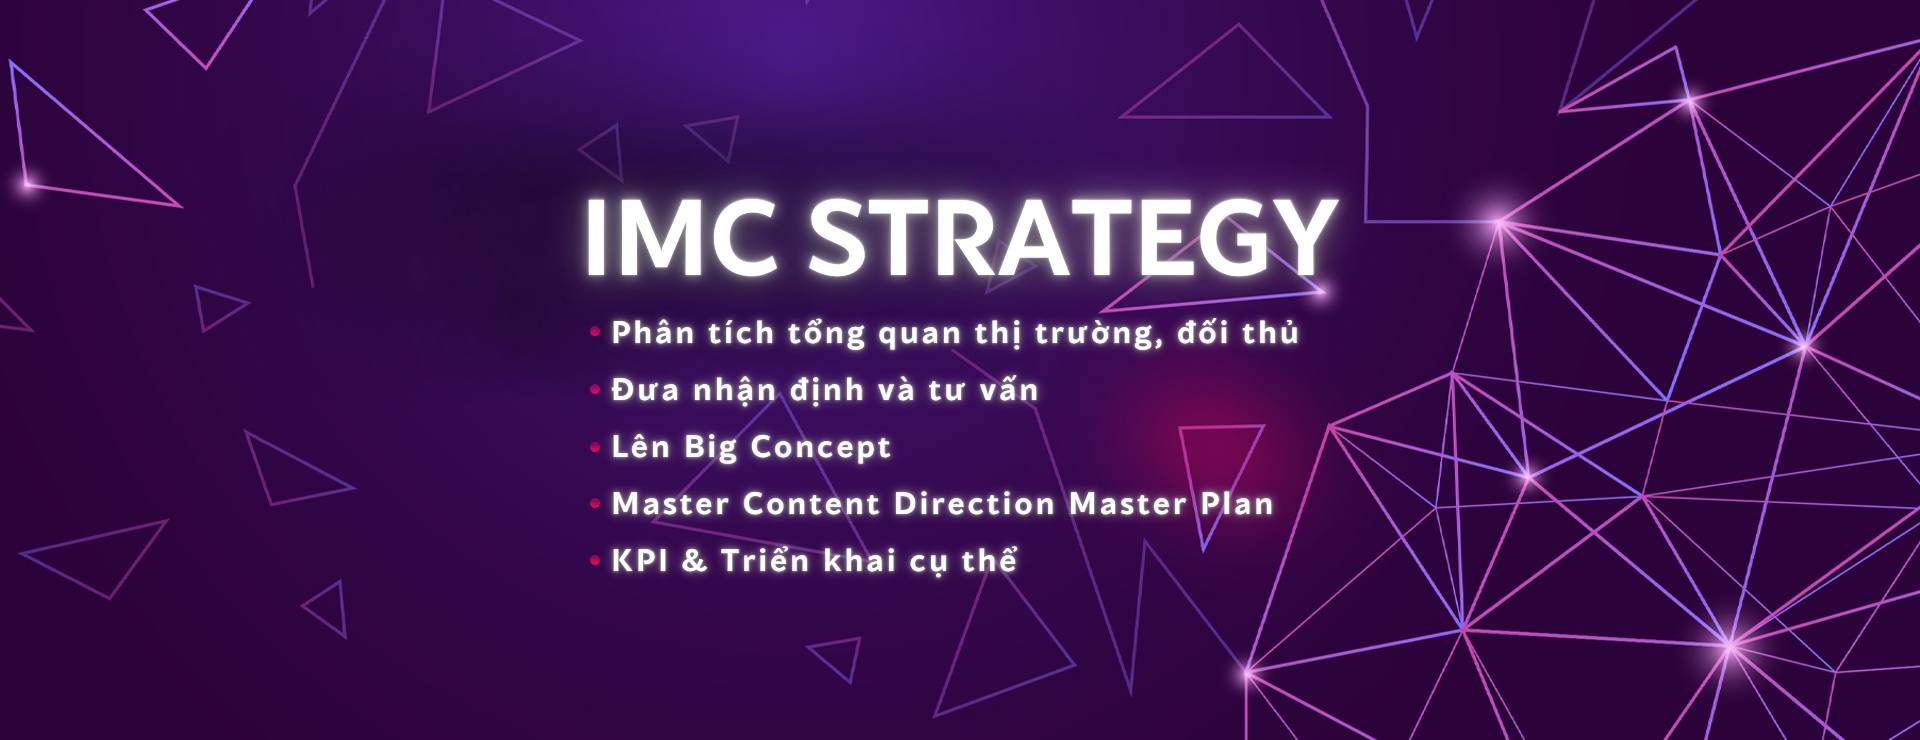 IMC Strategy